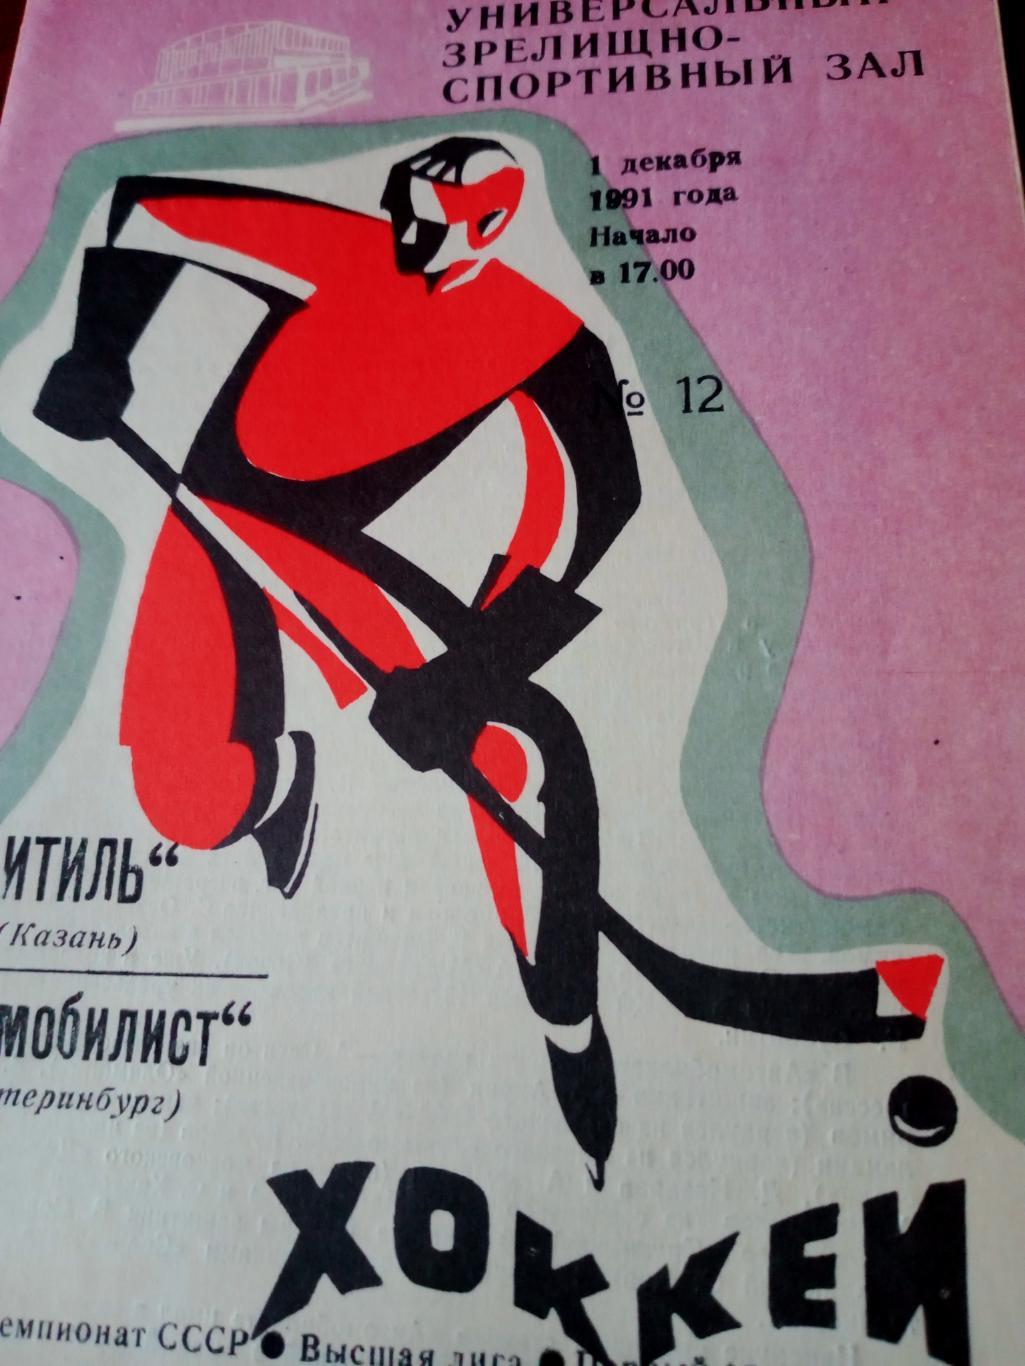 Итиль Казань - Автомобилист Екатеринбург. 1 декабря 1991 год